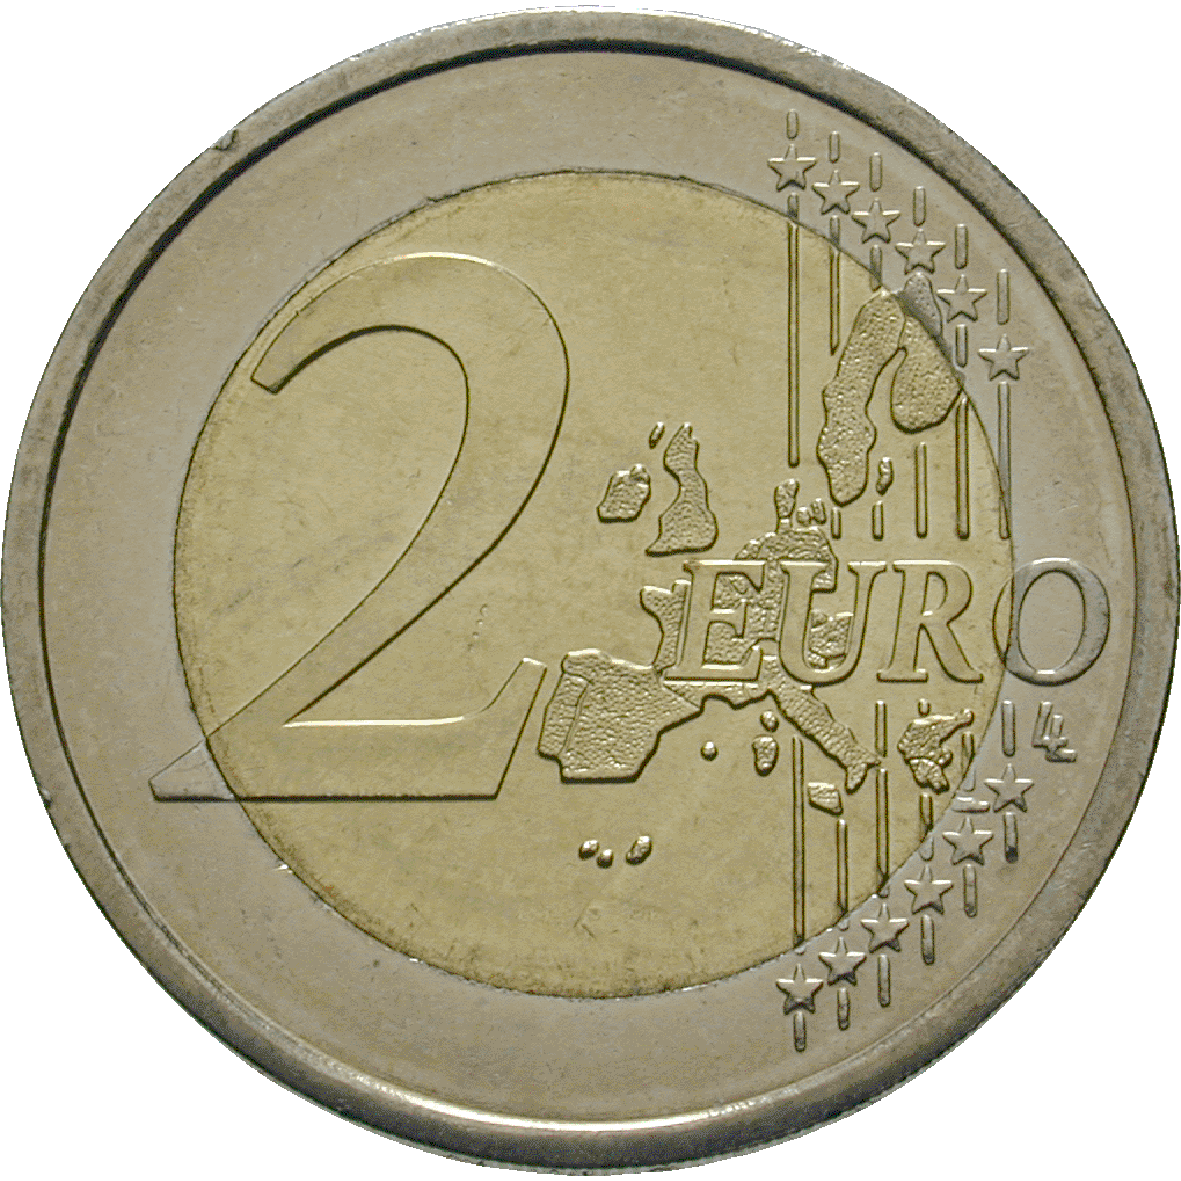 Fürstentum Monaco, Rainer III., 2 Euro 2002 (obverse)